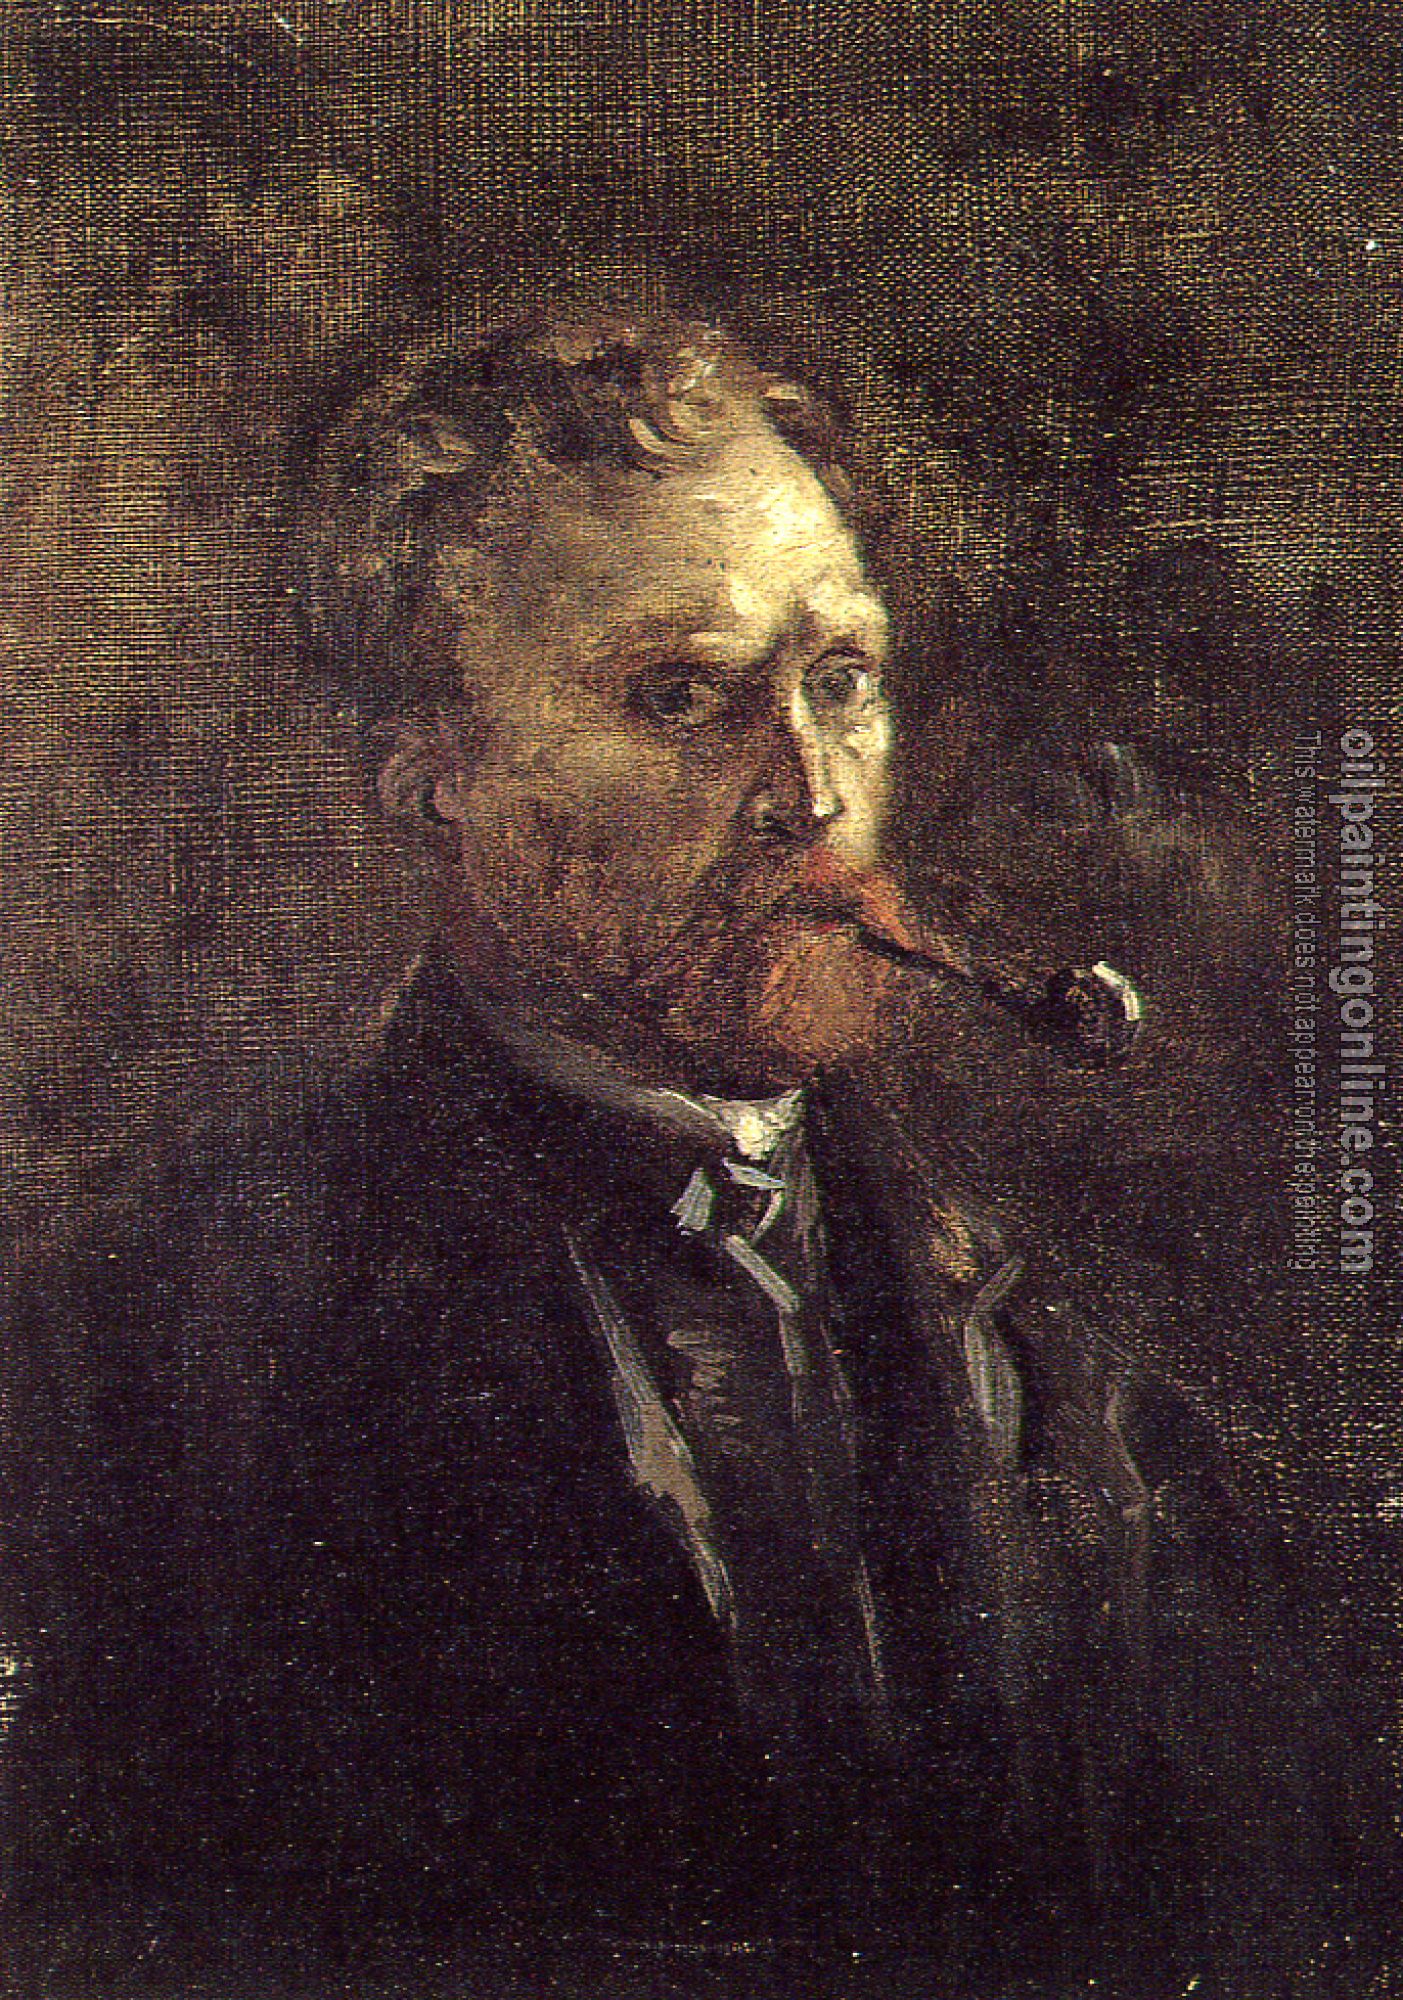 Gogh, Vincent van - Self-portrait with pipe